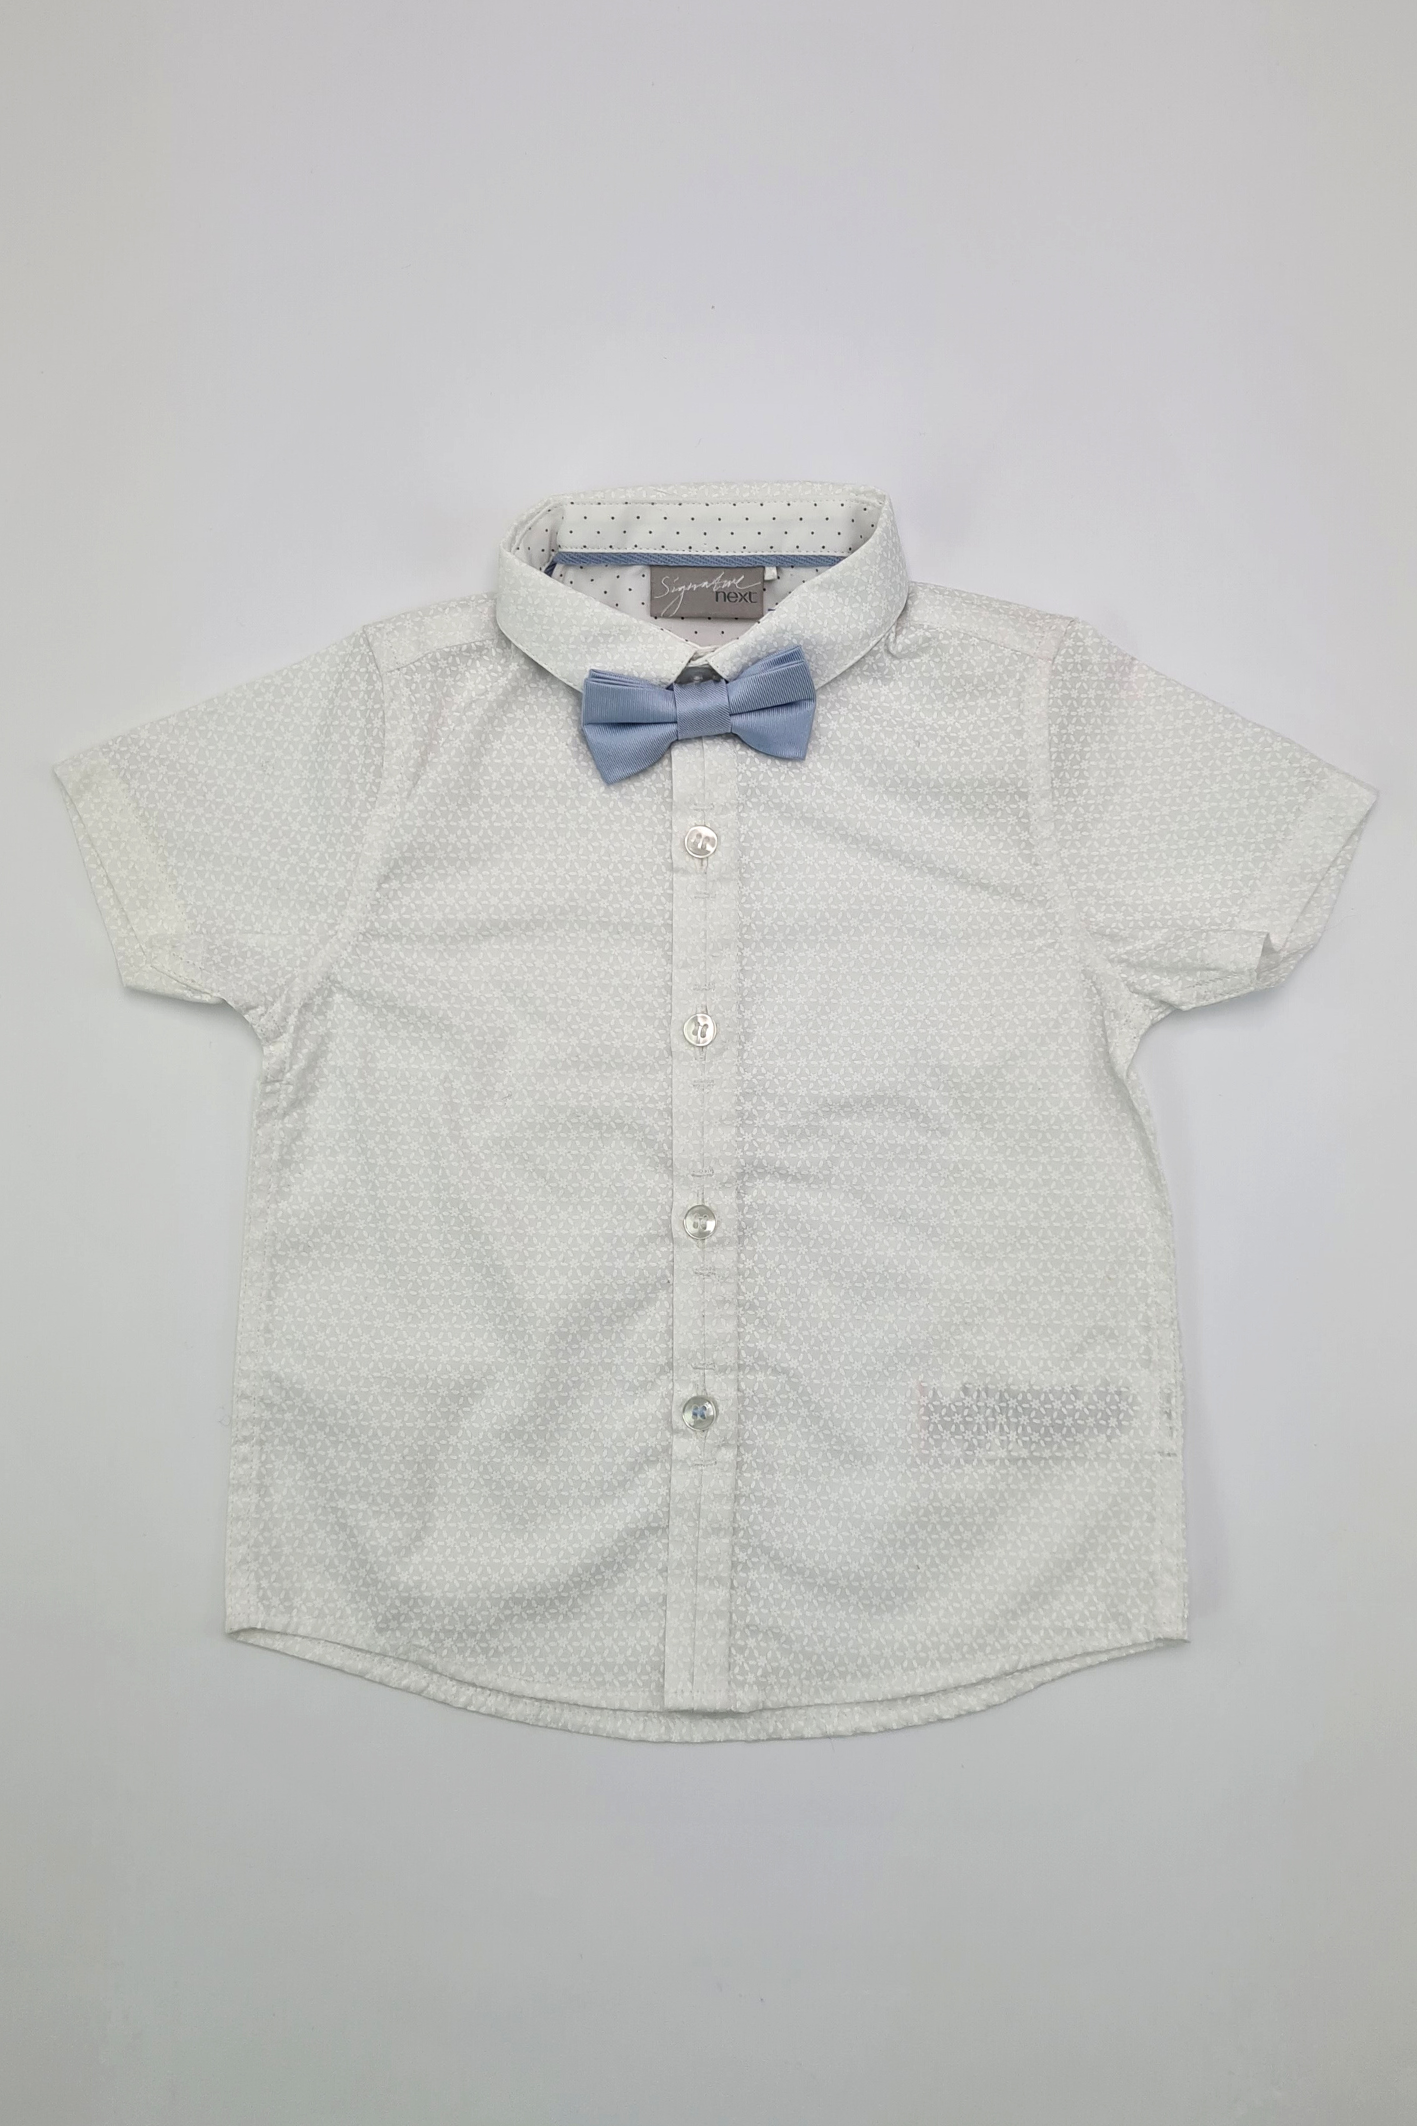 9-12m - 100% Cotton White Short Sleeve Shirt & 100% Silk Blue Bow Tie Set (Next)